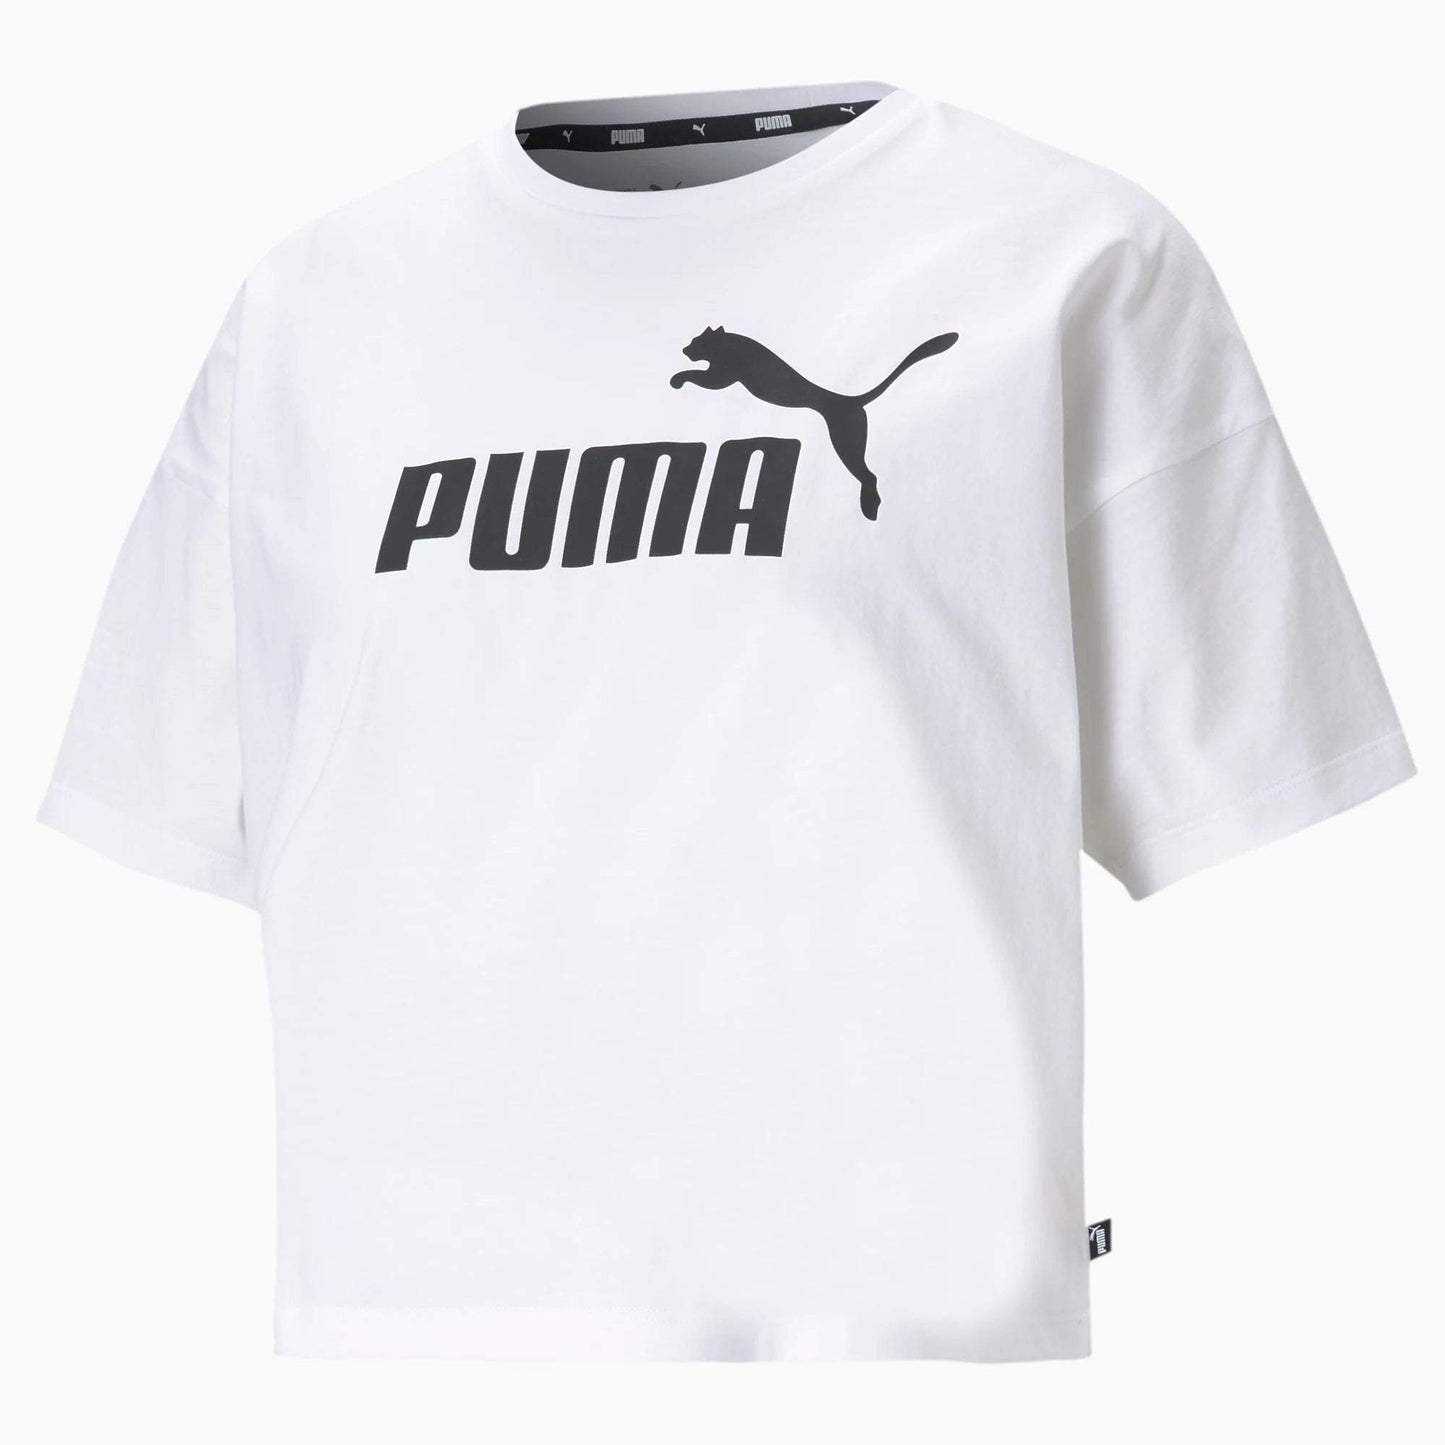 T-shirt Puma Corta Bianca e Nera 586866 02